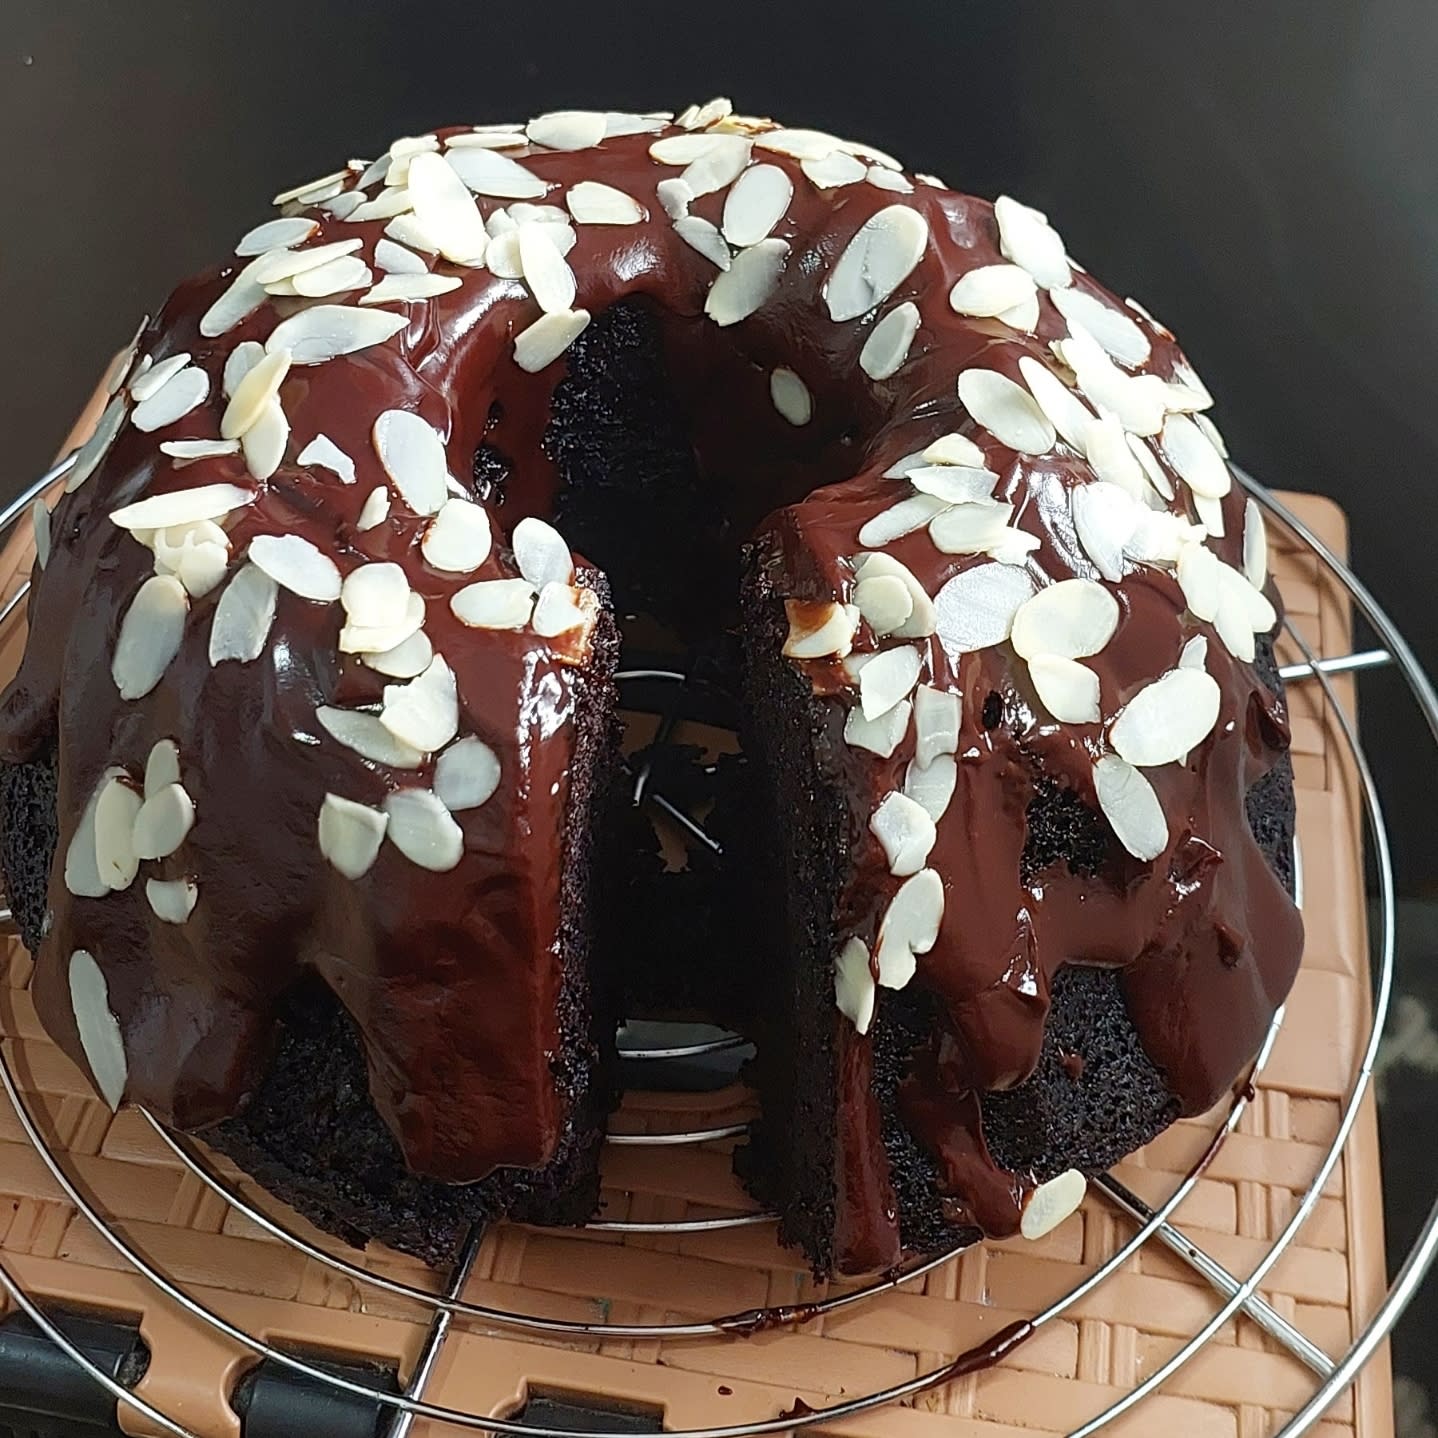 Vegan Chocolate Bundt Cake Recipe | Woolworths